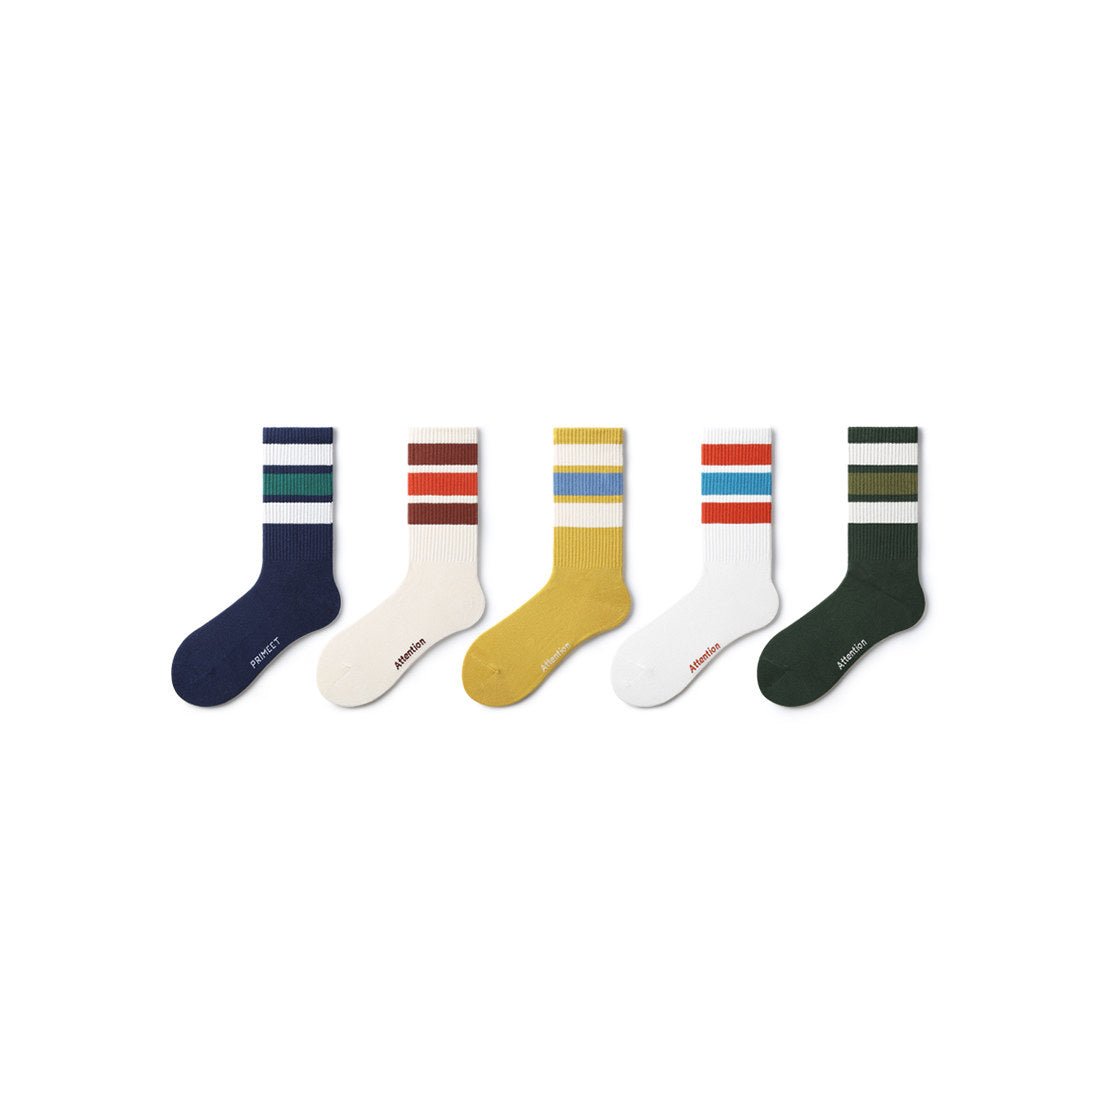 Attention Stripes All-season Unisex Active 5pcs Crew Socks Set - 0cm